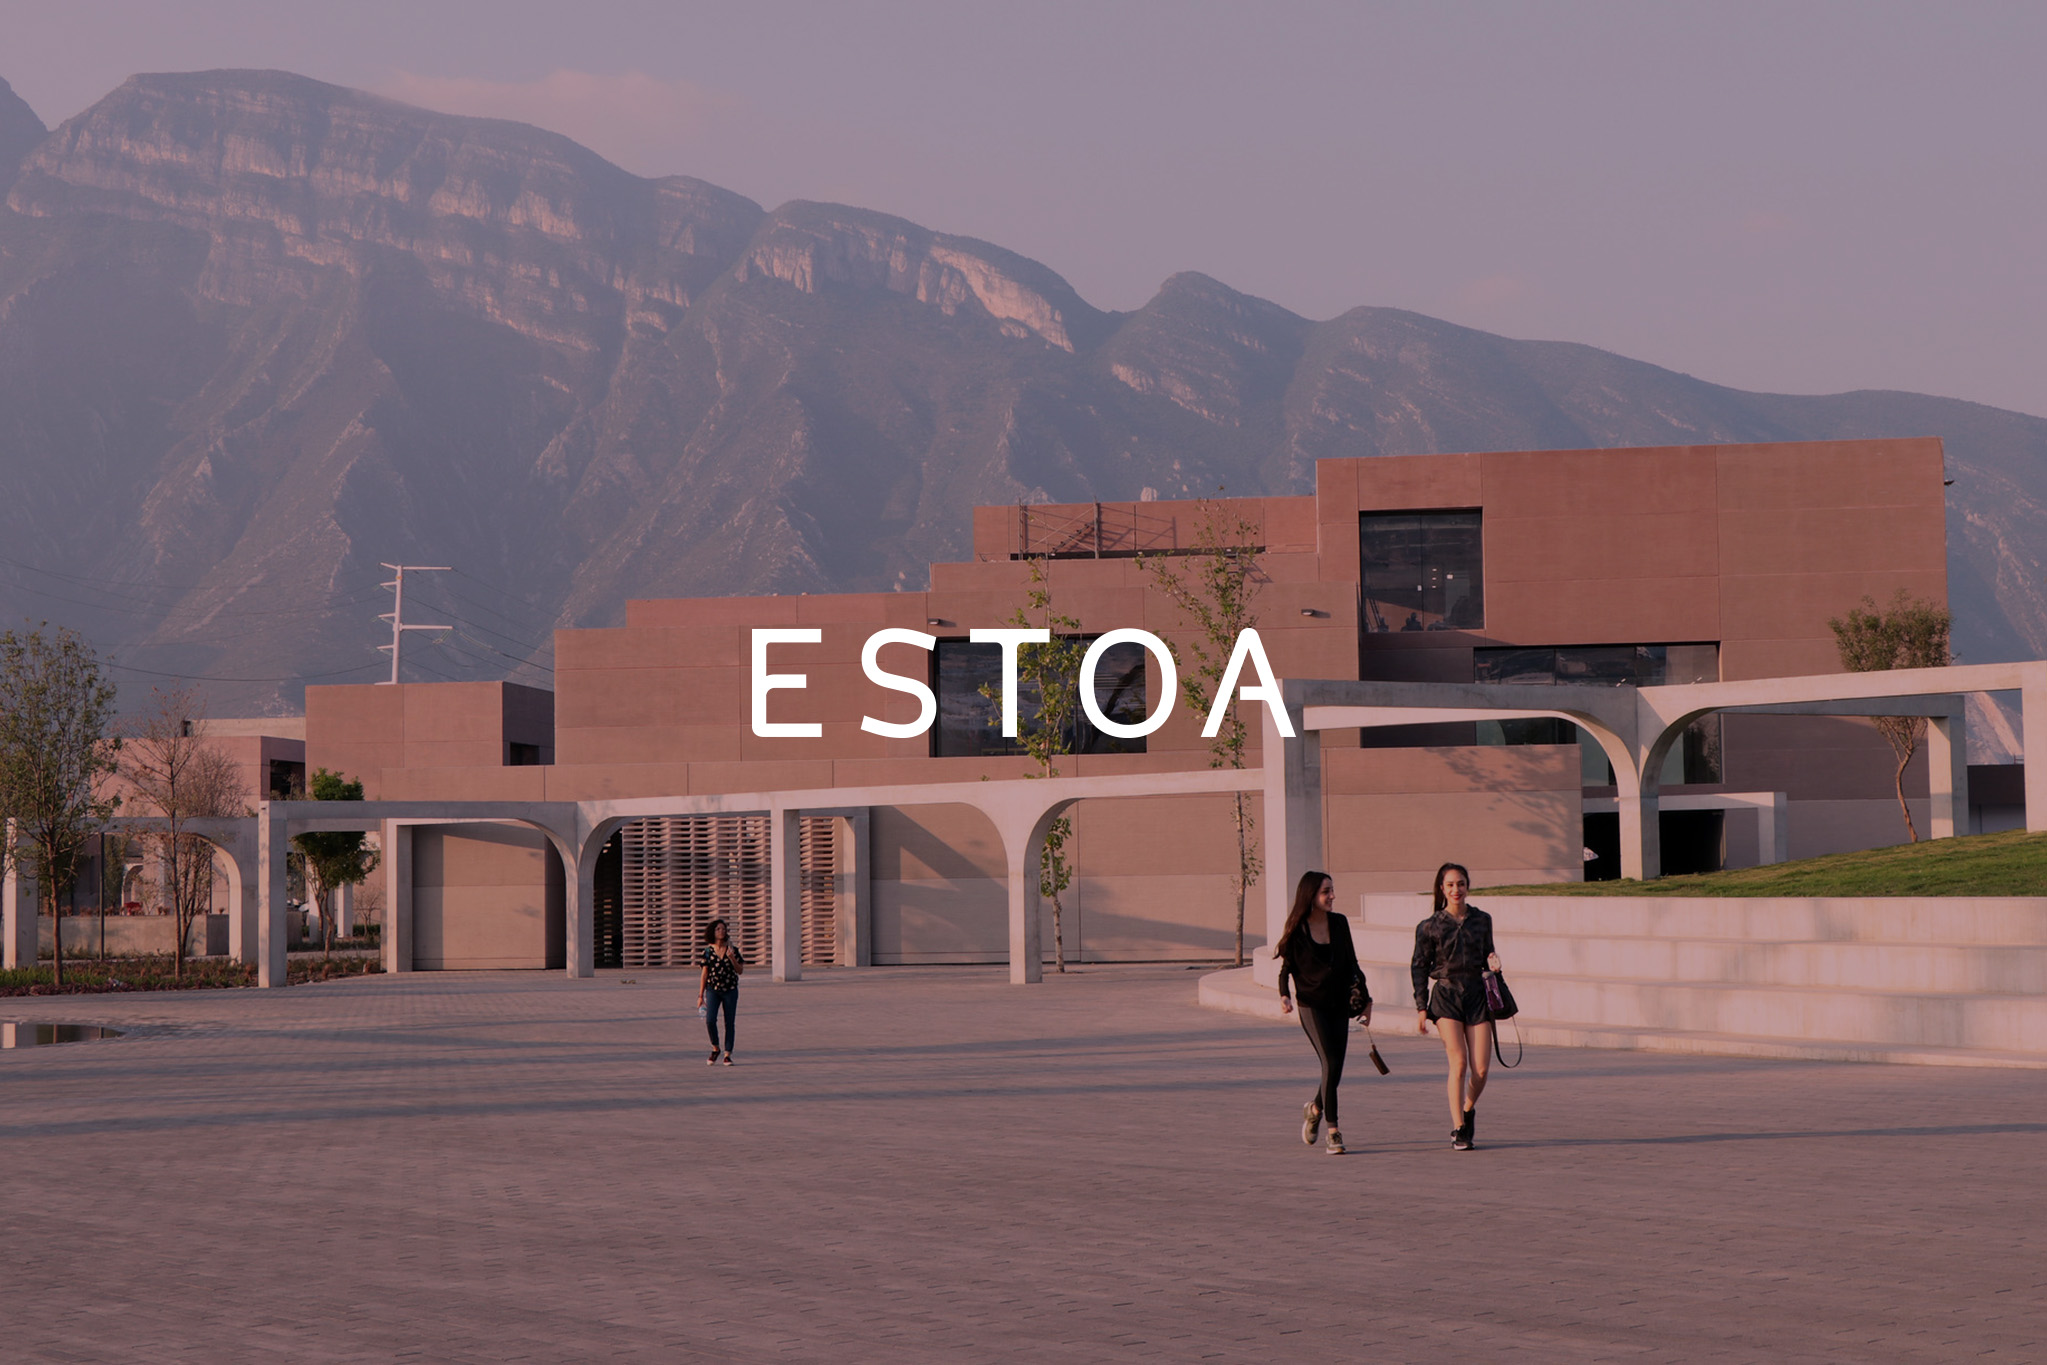 Branding and Publicity for “Estoa”, University of Monterrey’s New Building